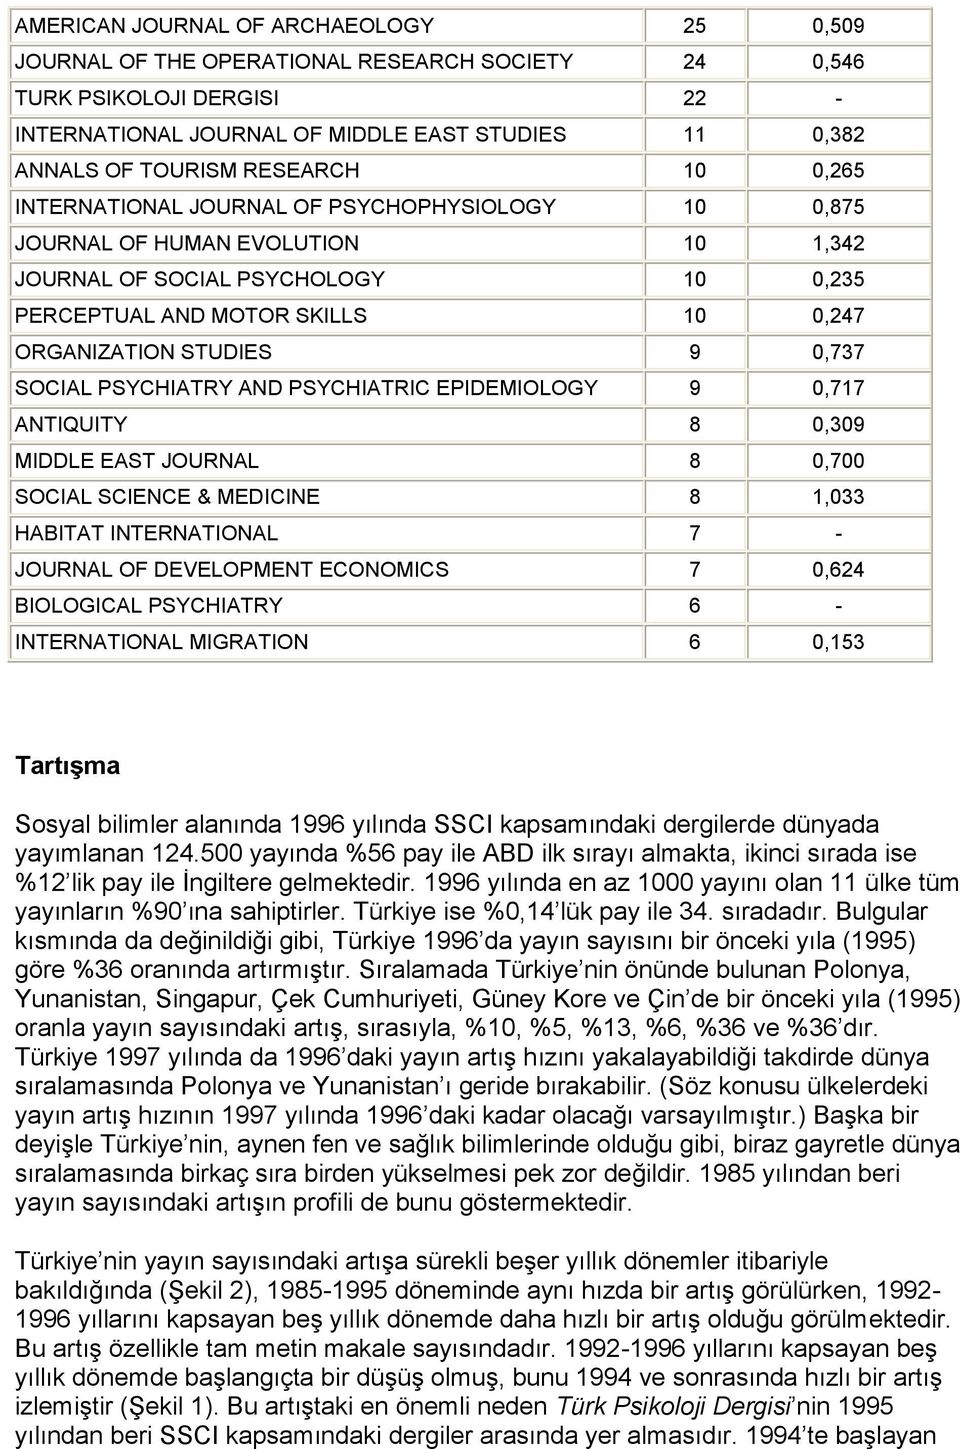 STUDIES 9 0,737 SOCIAL PSYCHIATRY AND PSYCHIATRIC EPIDEMIOLOGY 9 0,717 ANTIQUITY 8 0,309 MIDDLE EAST JOURNAL 8 0,700 SOCIAL SCIENCE & MEDICINE 8 1,033 HABITAT INTERNATIONAL 7 - JOURNAL OF DEVELOPMENT